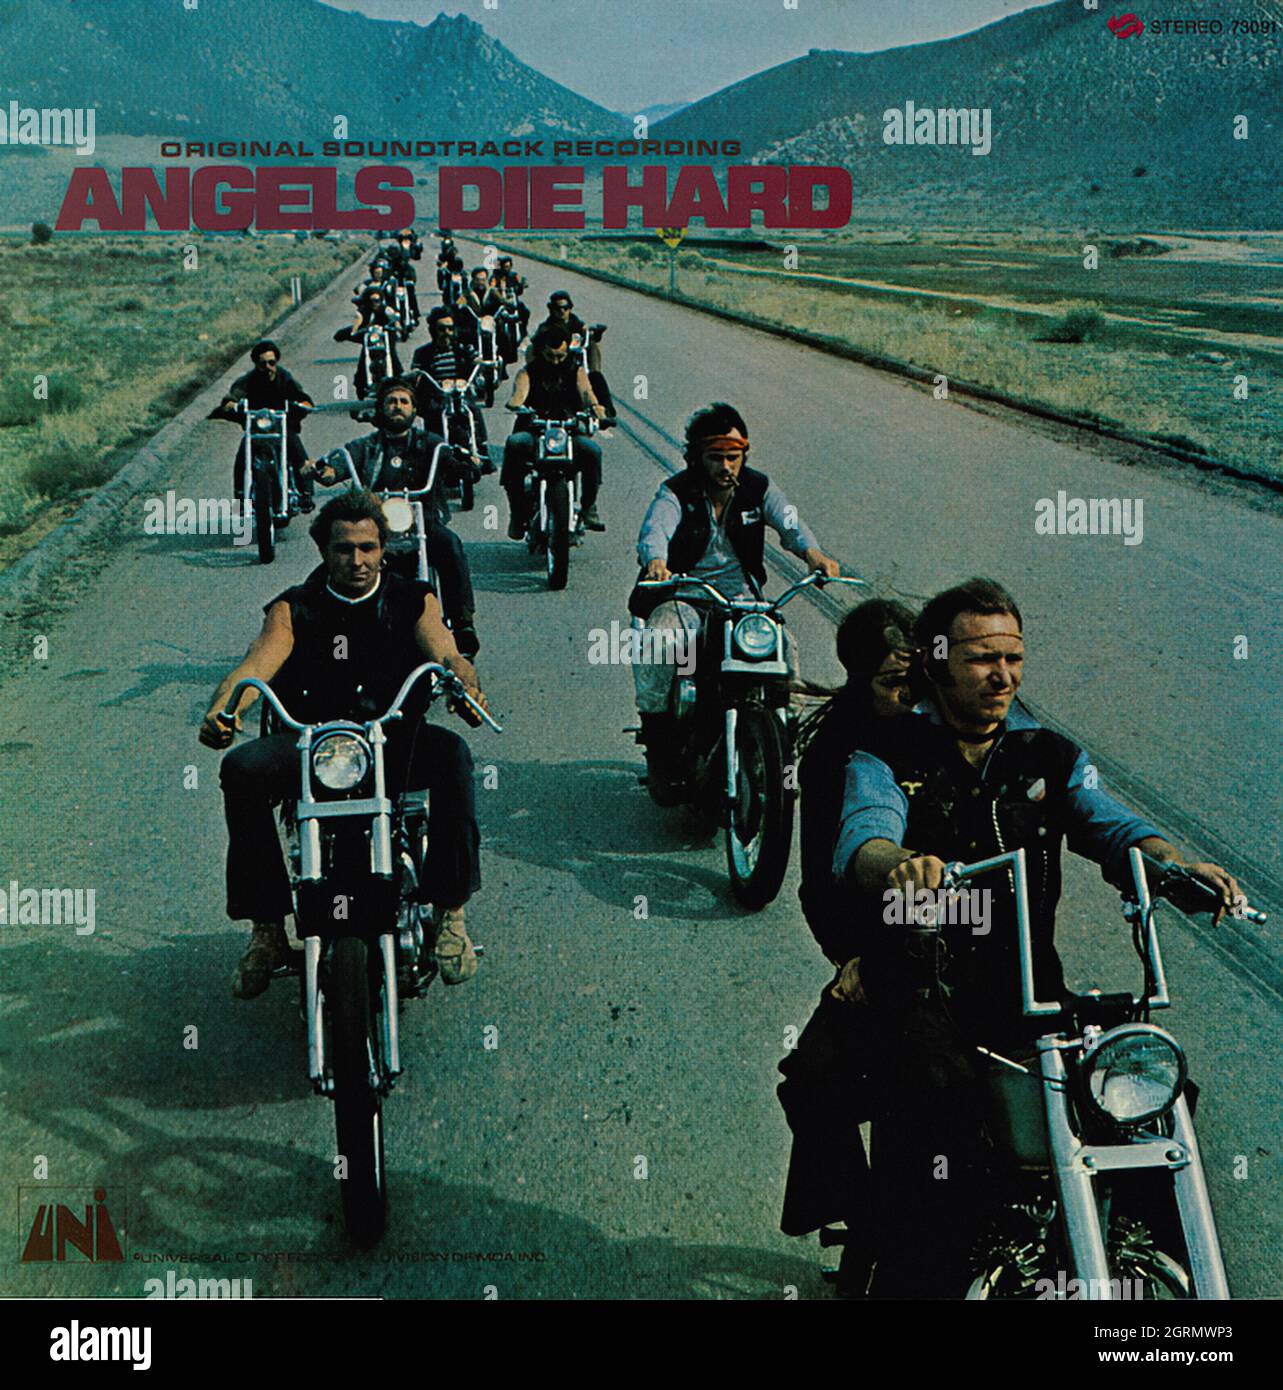 Angels Die Hard - Vintage Soundtrack Vinyl Album Stock Photo